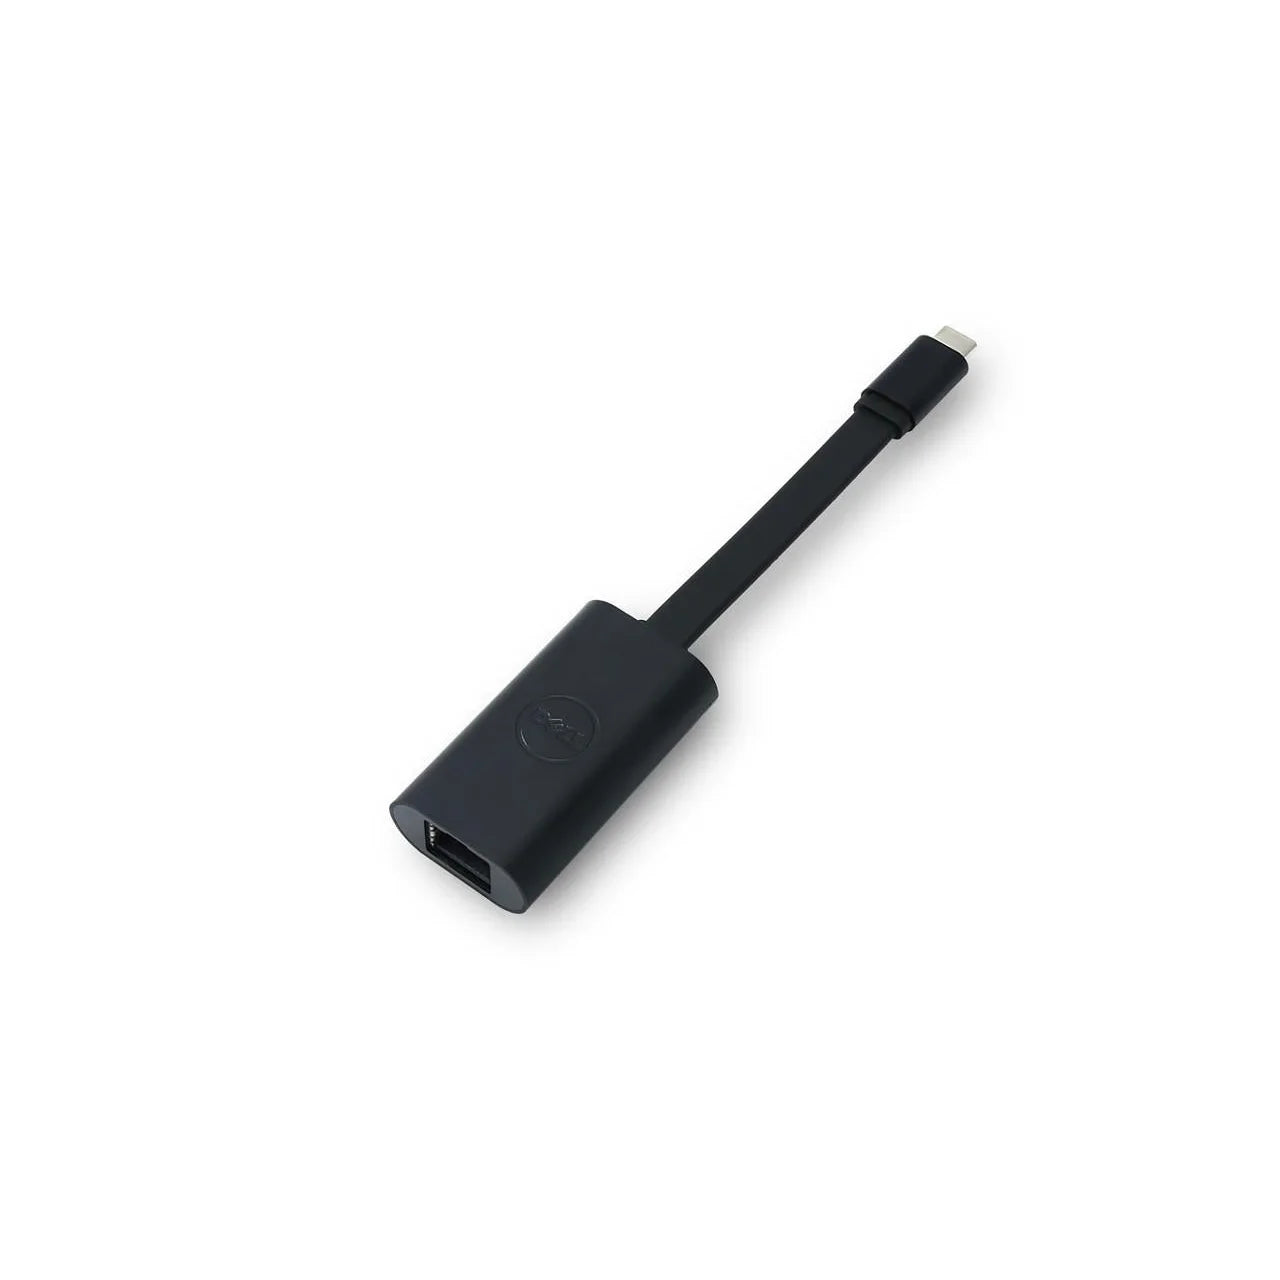 Dell adaptor - USB-C to Gigabit Ethernet-Dexter Computer